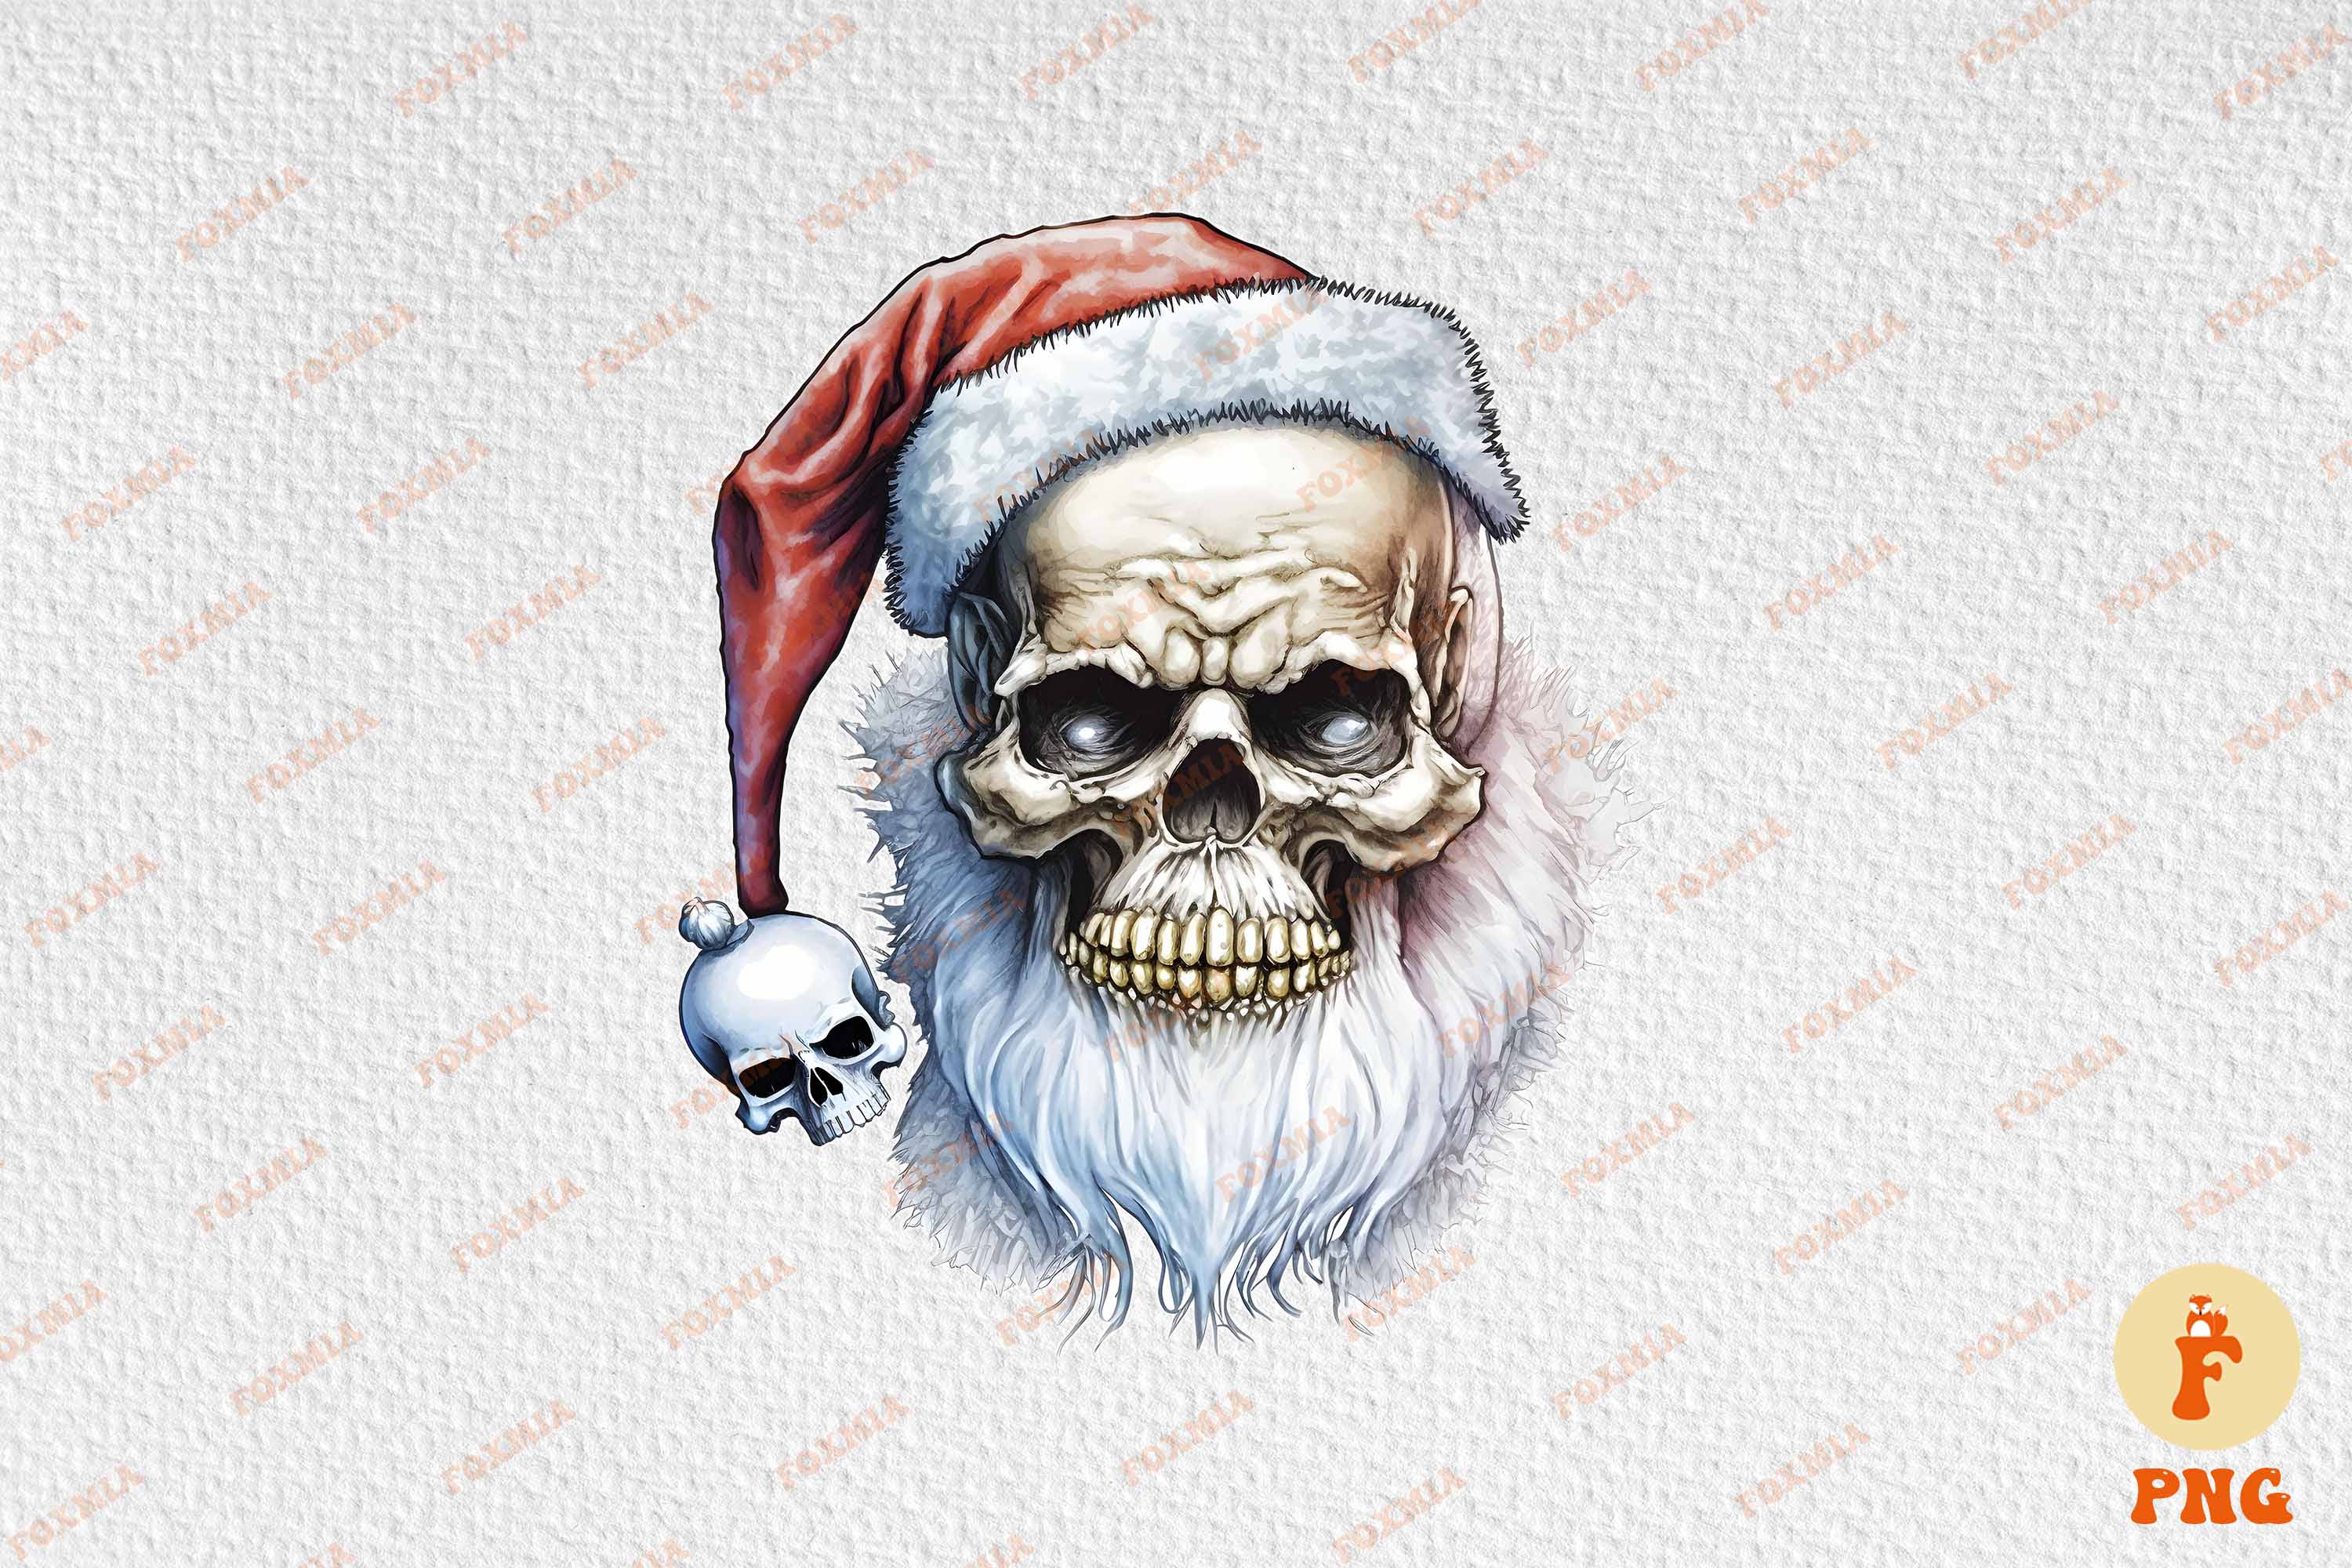 Santa Claus Skull Psd T-shirt Design PSD Editable Template